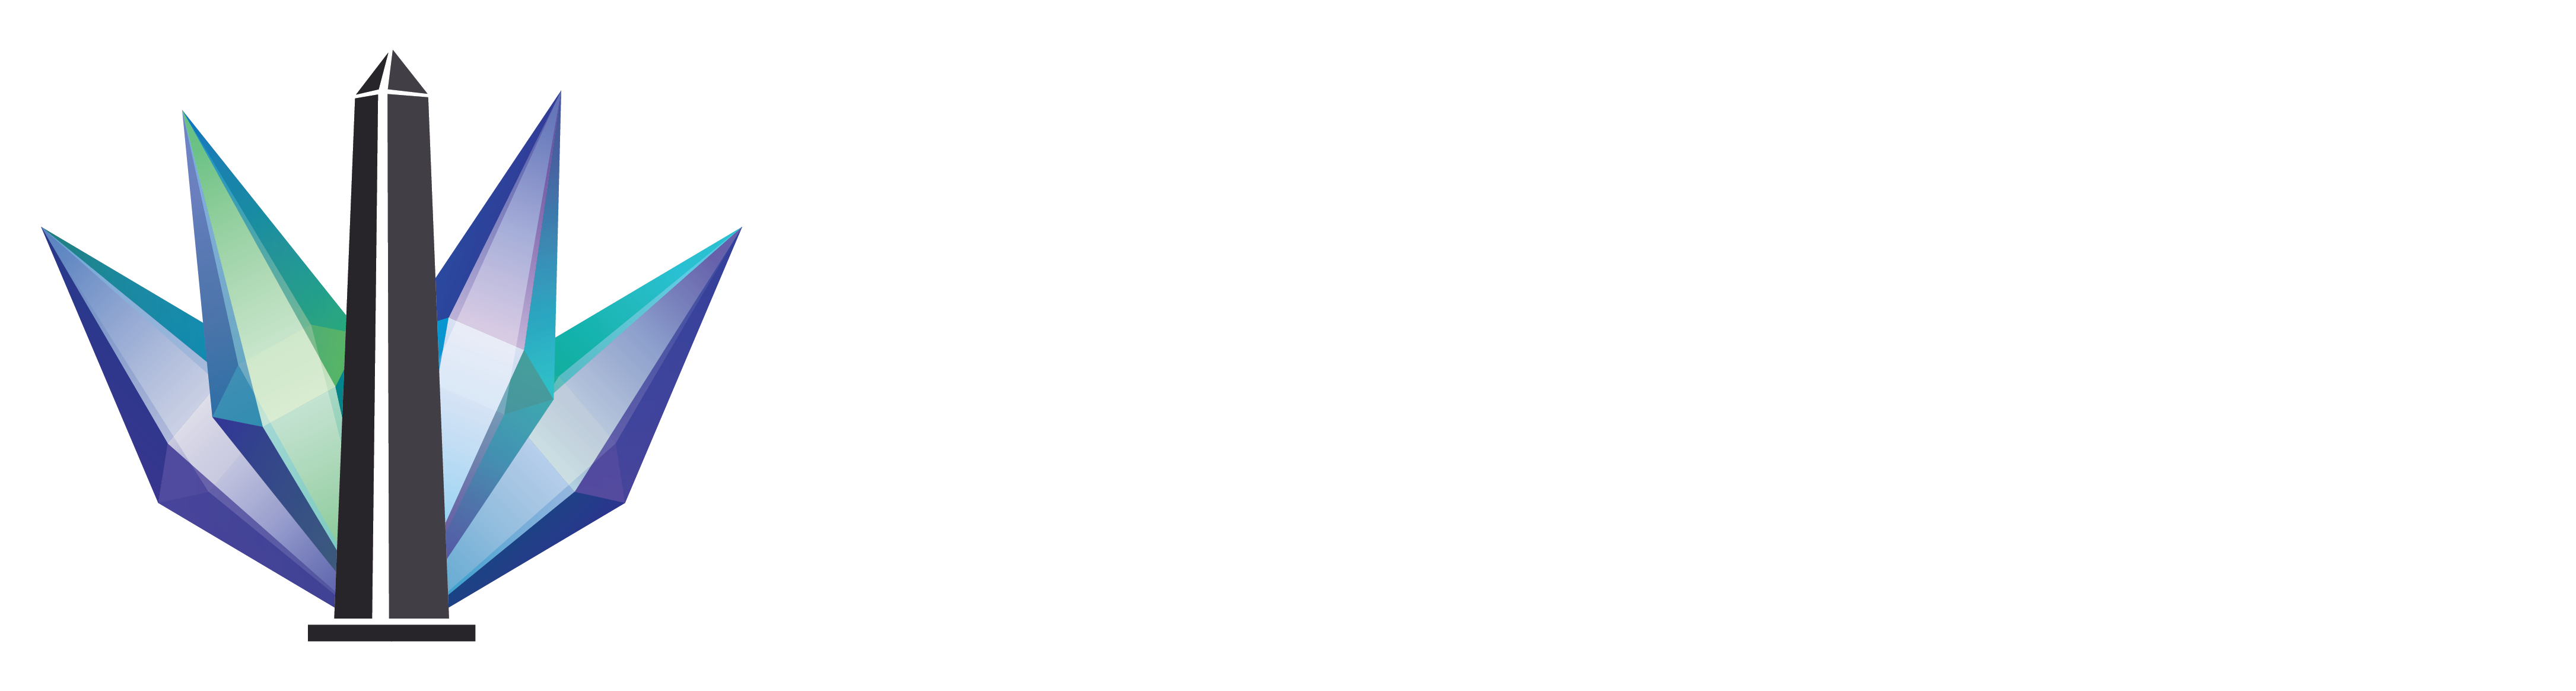 Quartz Glass